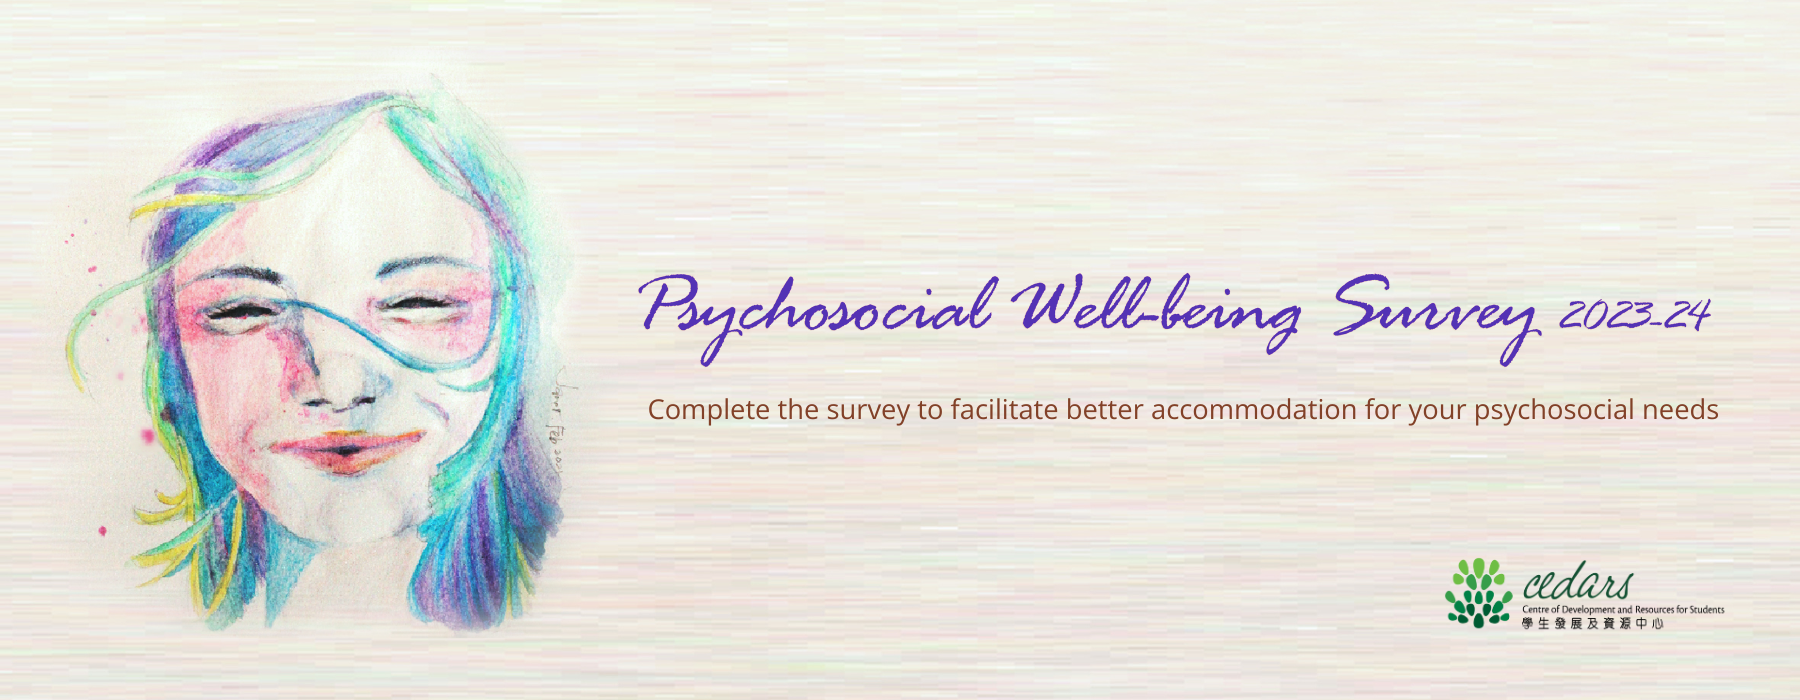  Psychosocial wellbeing survey